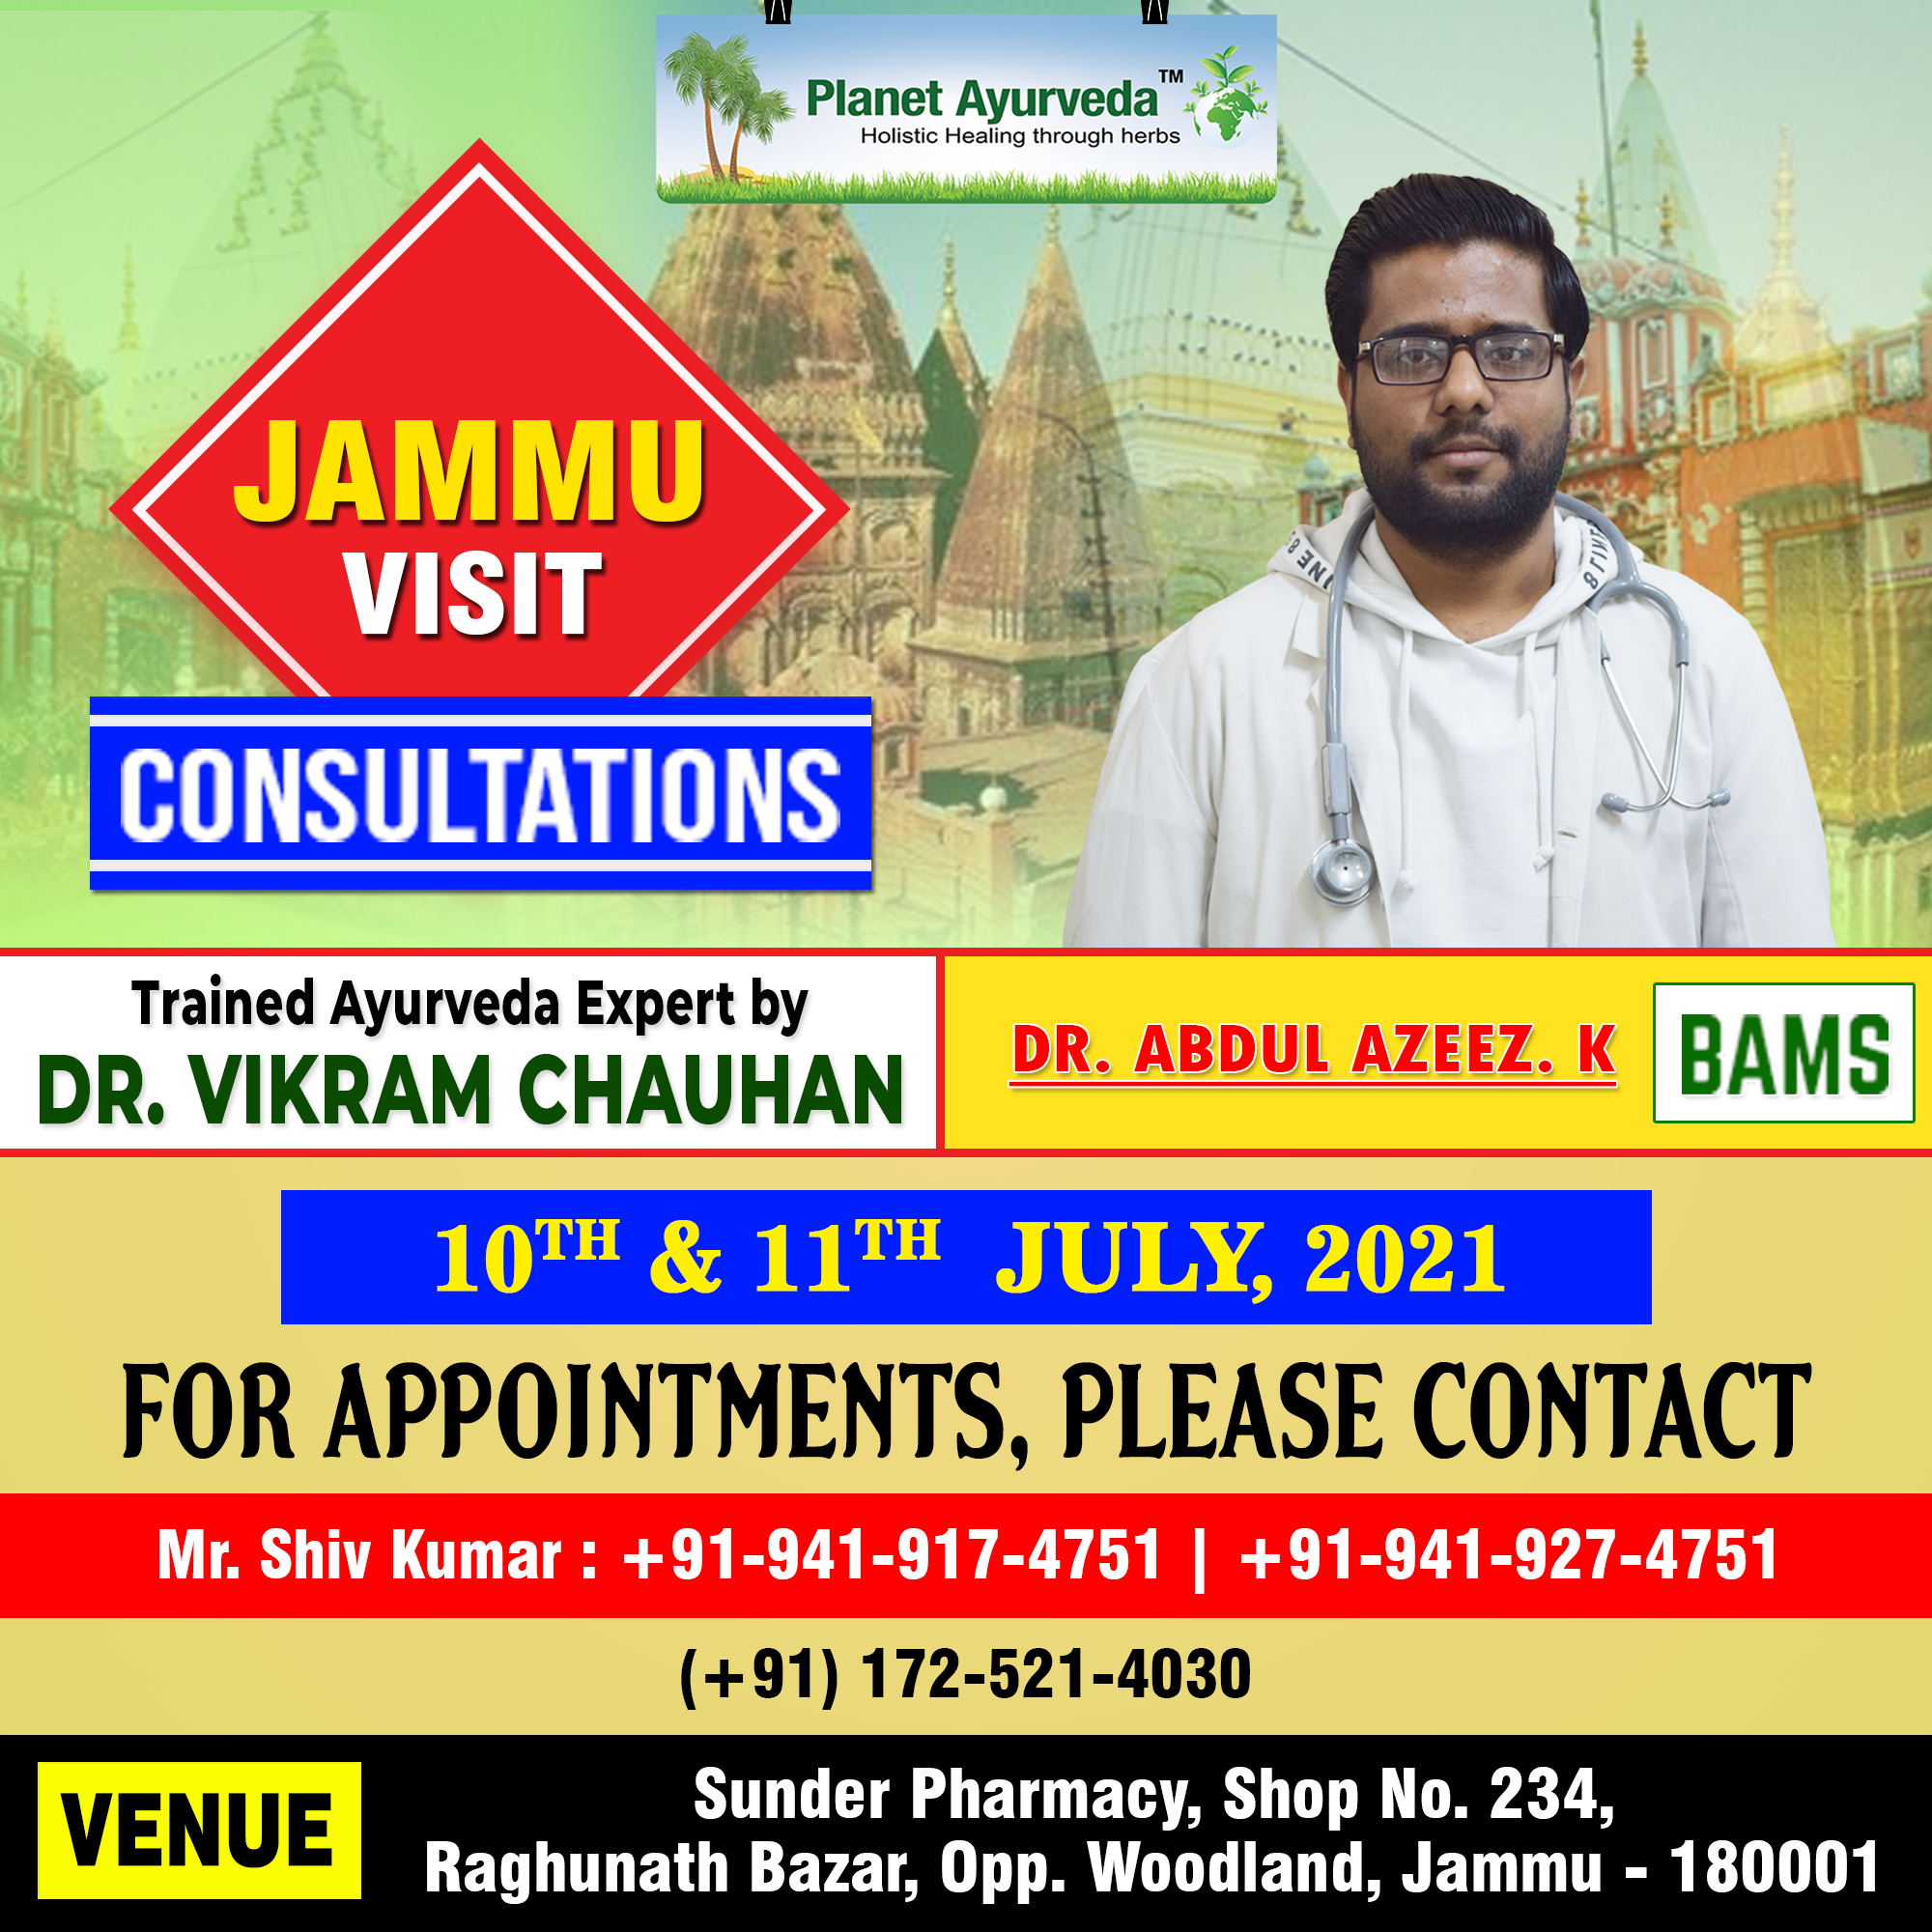 Ayurvedic Consultation in Jammu By Trained Expert of Planet Ayurveda, Jammu, Jammu and Kashmir, India